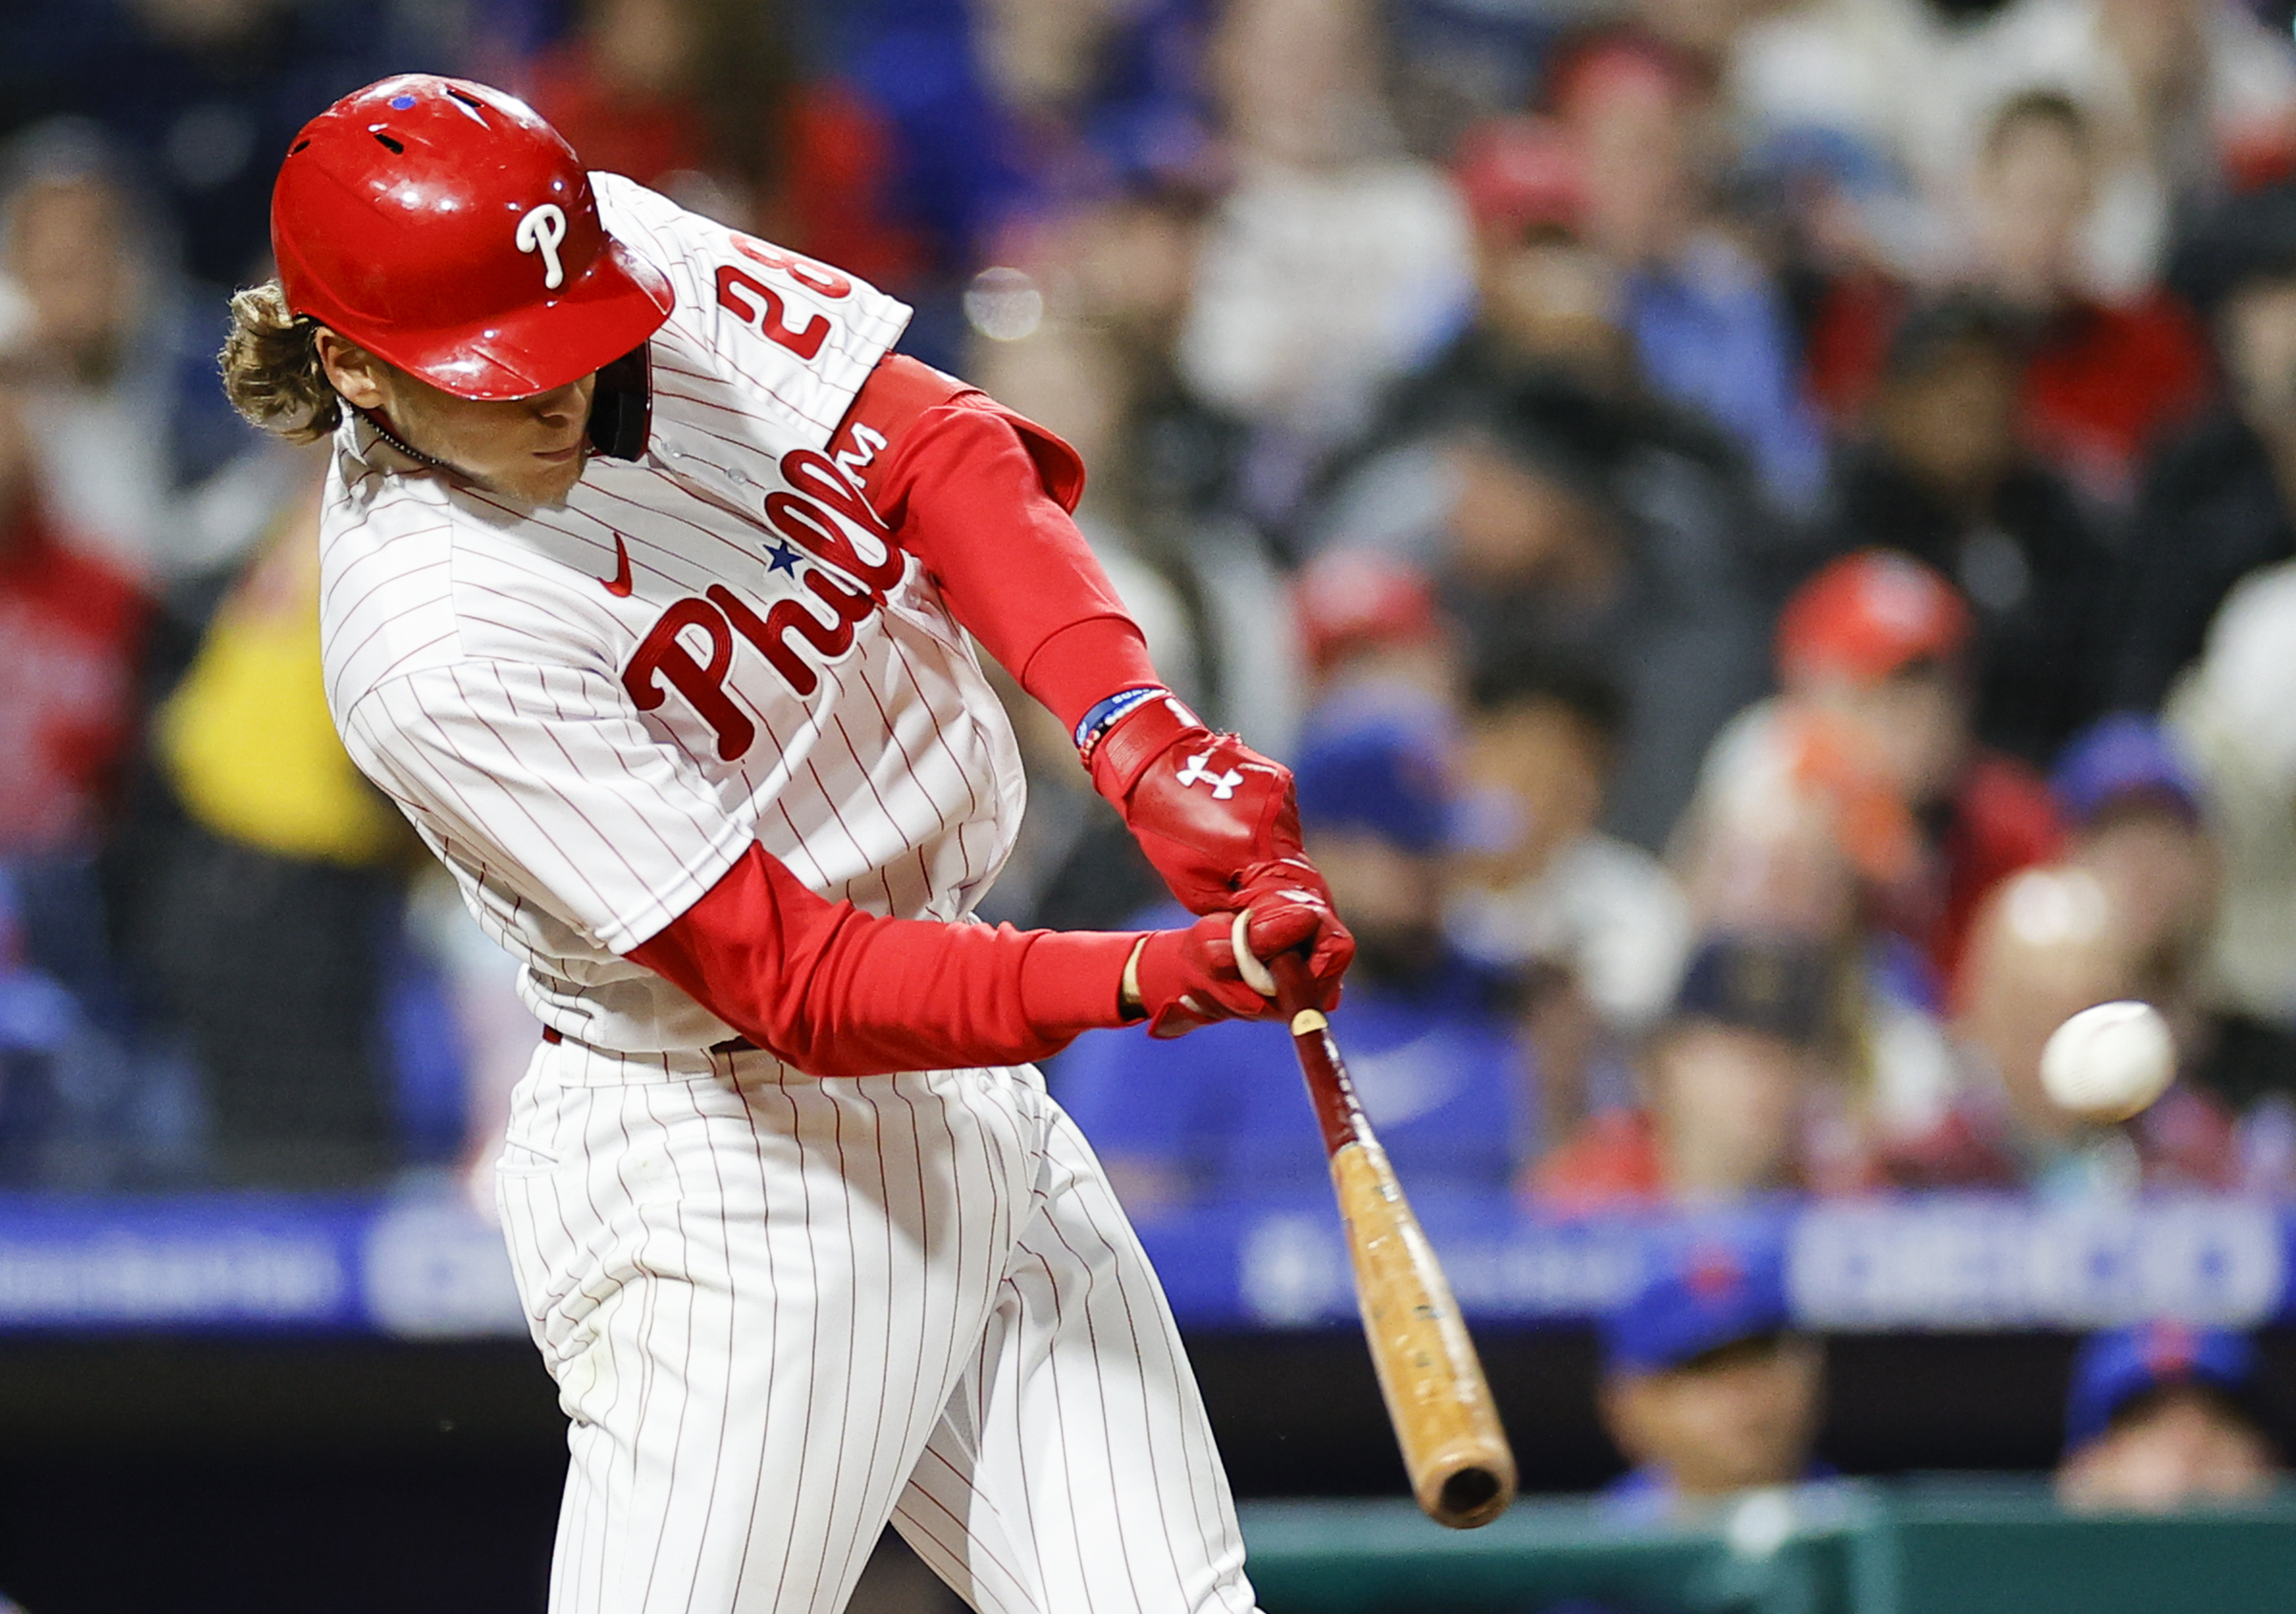 Phillies' Alec Bohm explodes, slams bat after called strike three